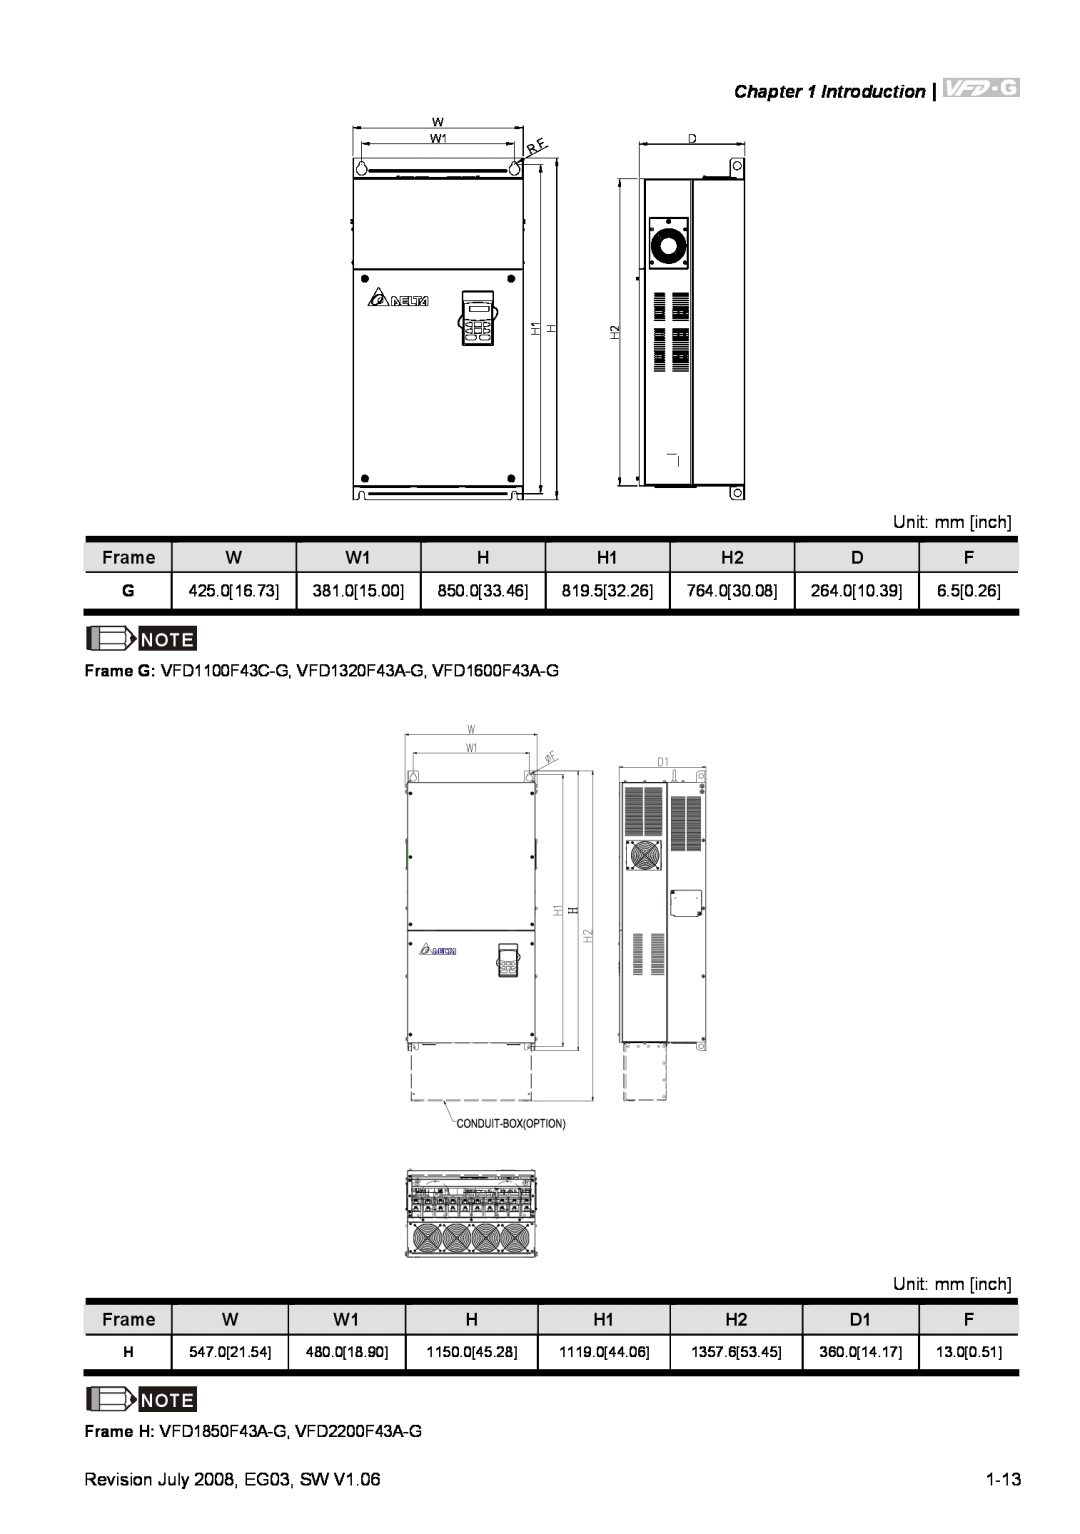 Delta Electronics VFD-G manual Introduction, Frame, 425.016.73 